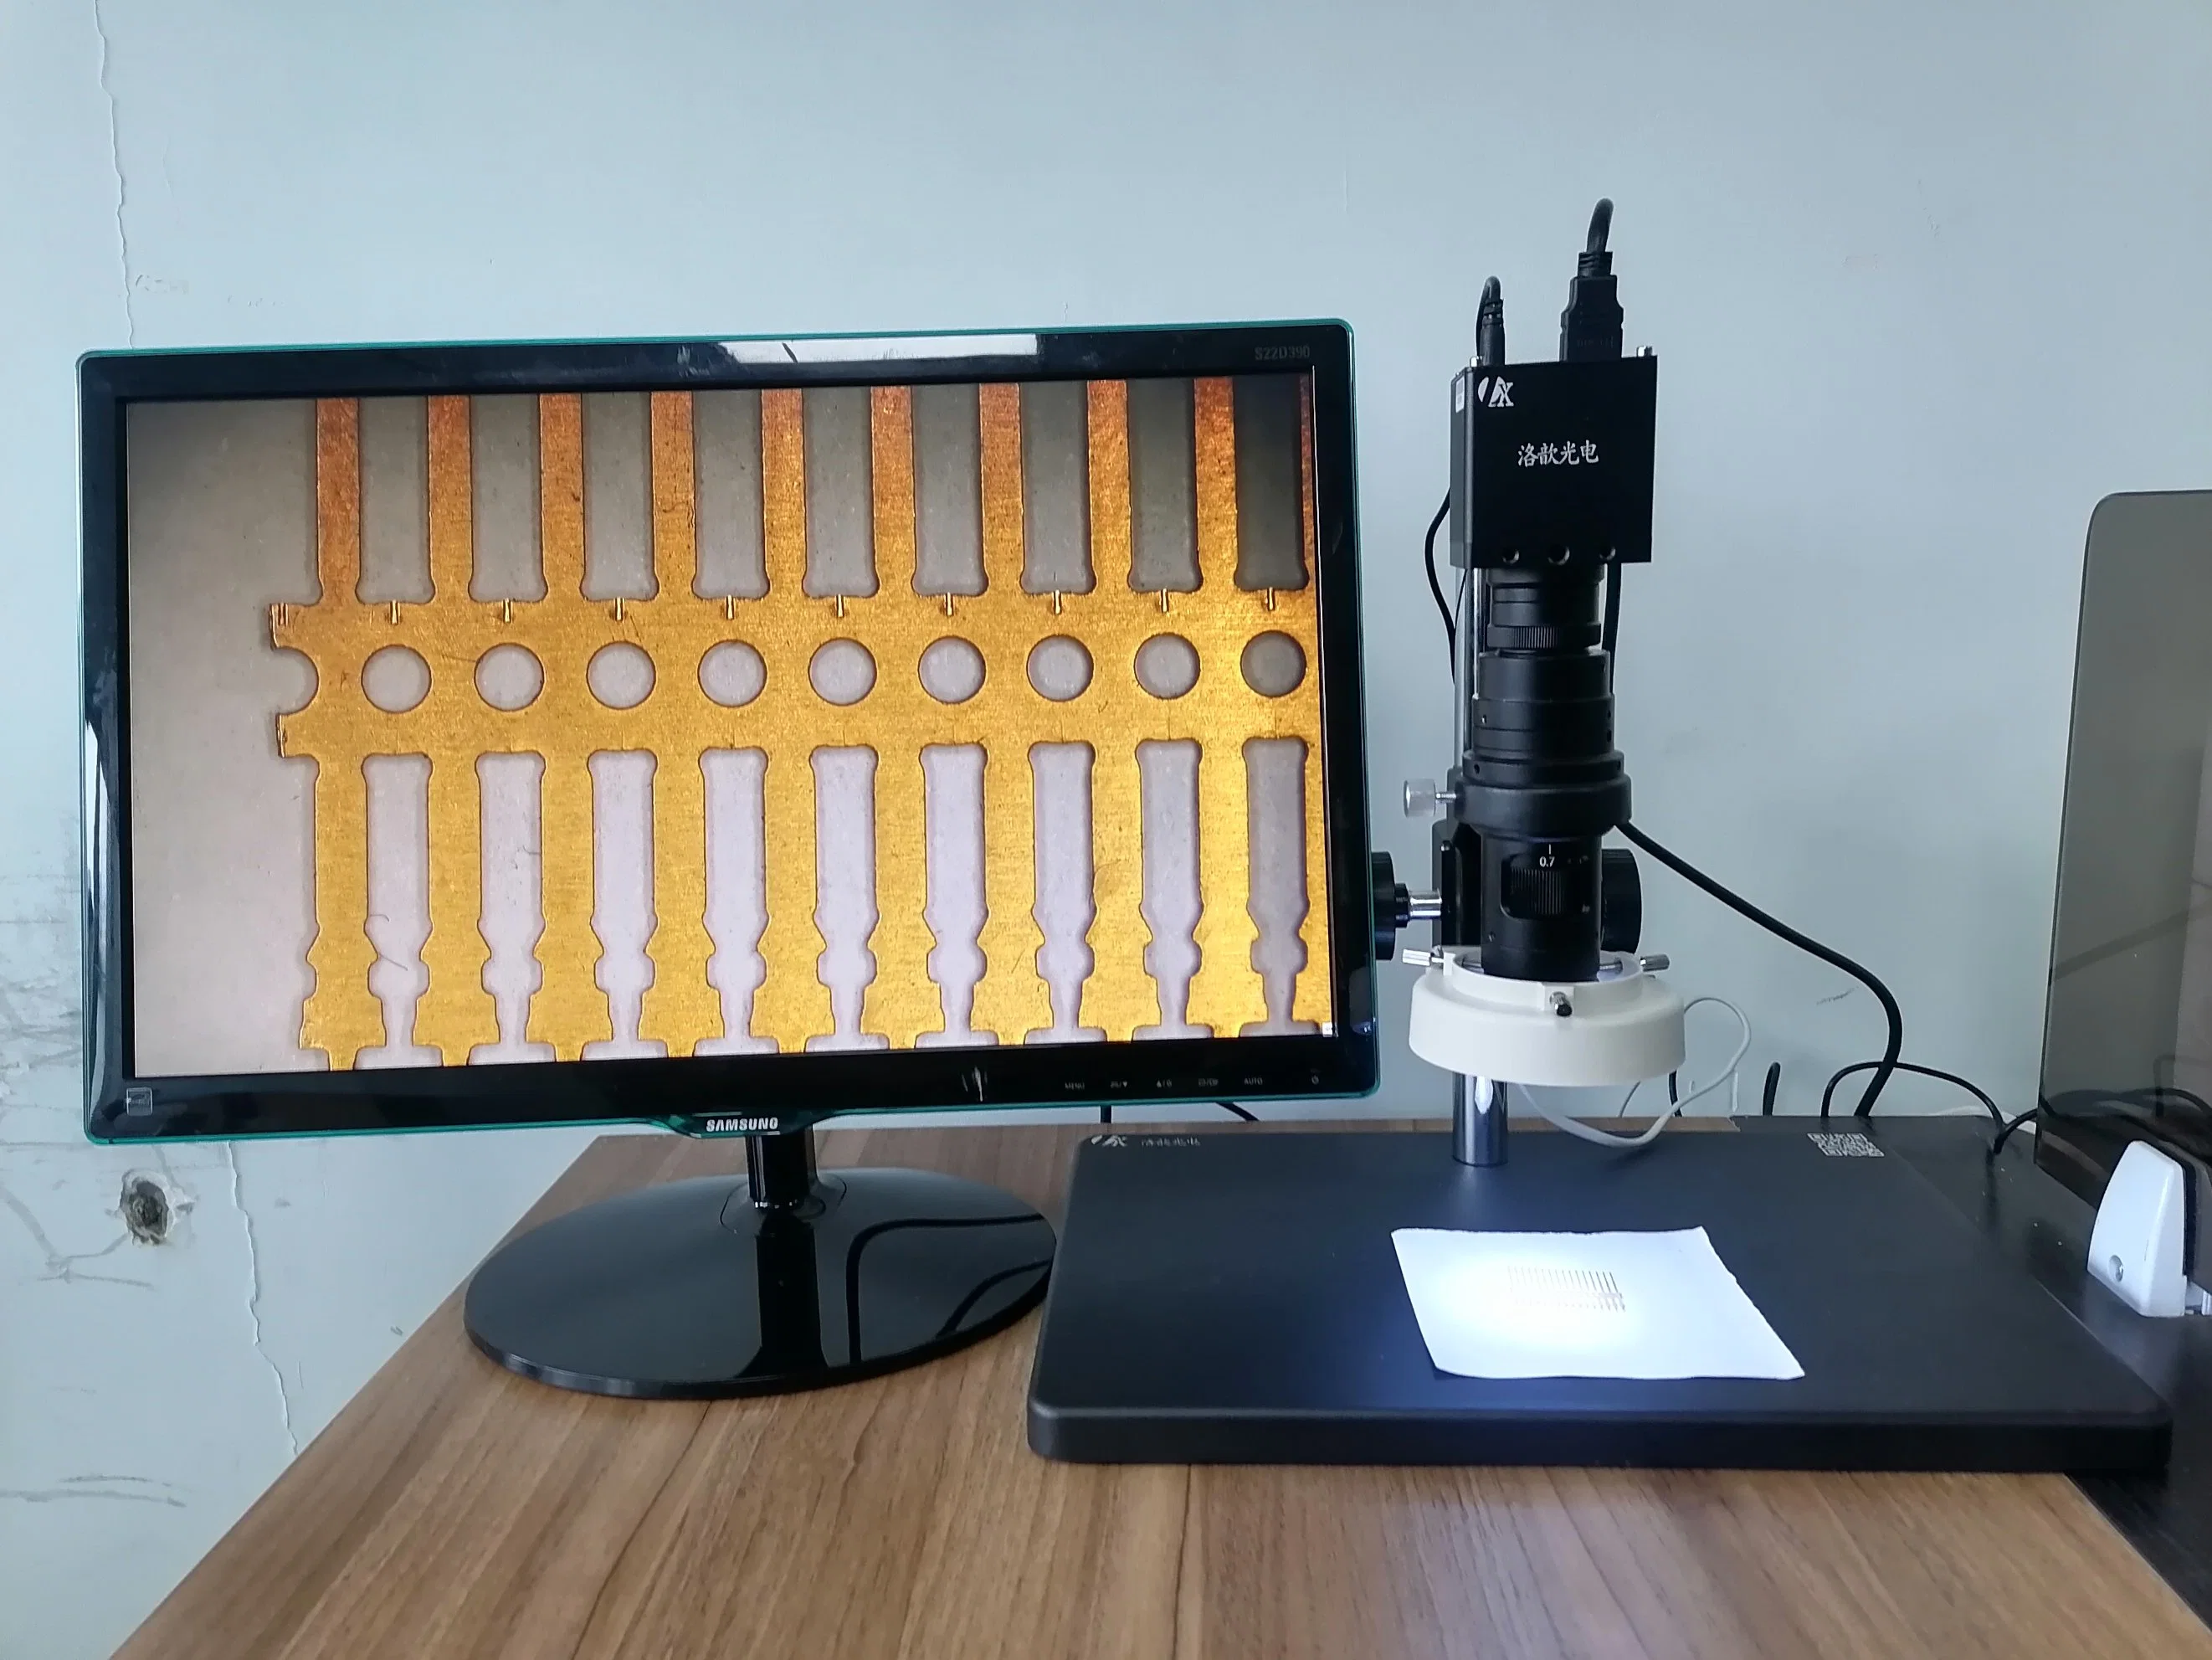 Digital Video Microscopes for Electronic Component High Digital Camera Autofocus USB Electron Microscope Lx-017HD